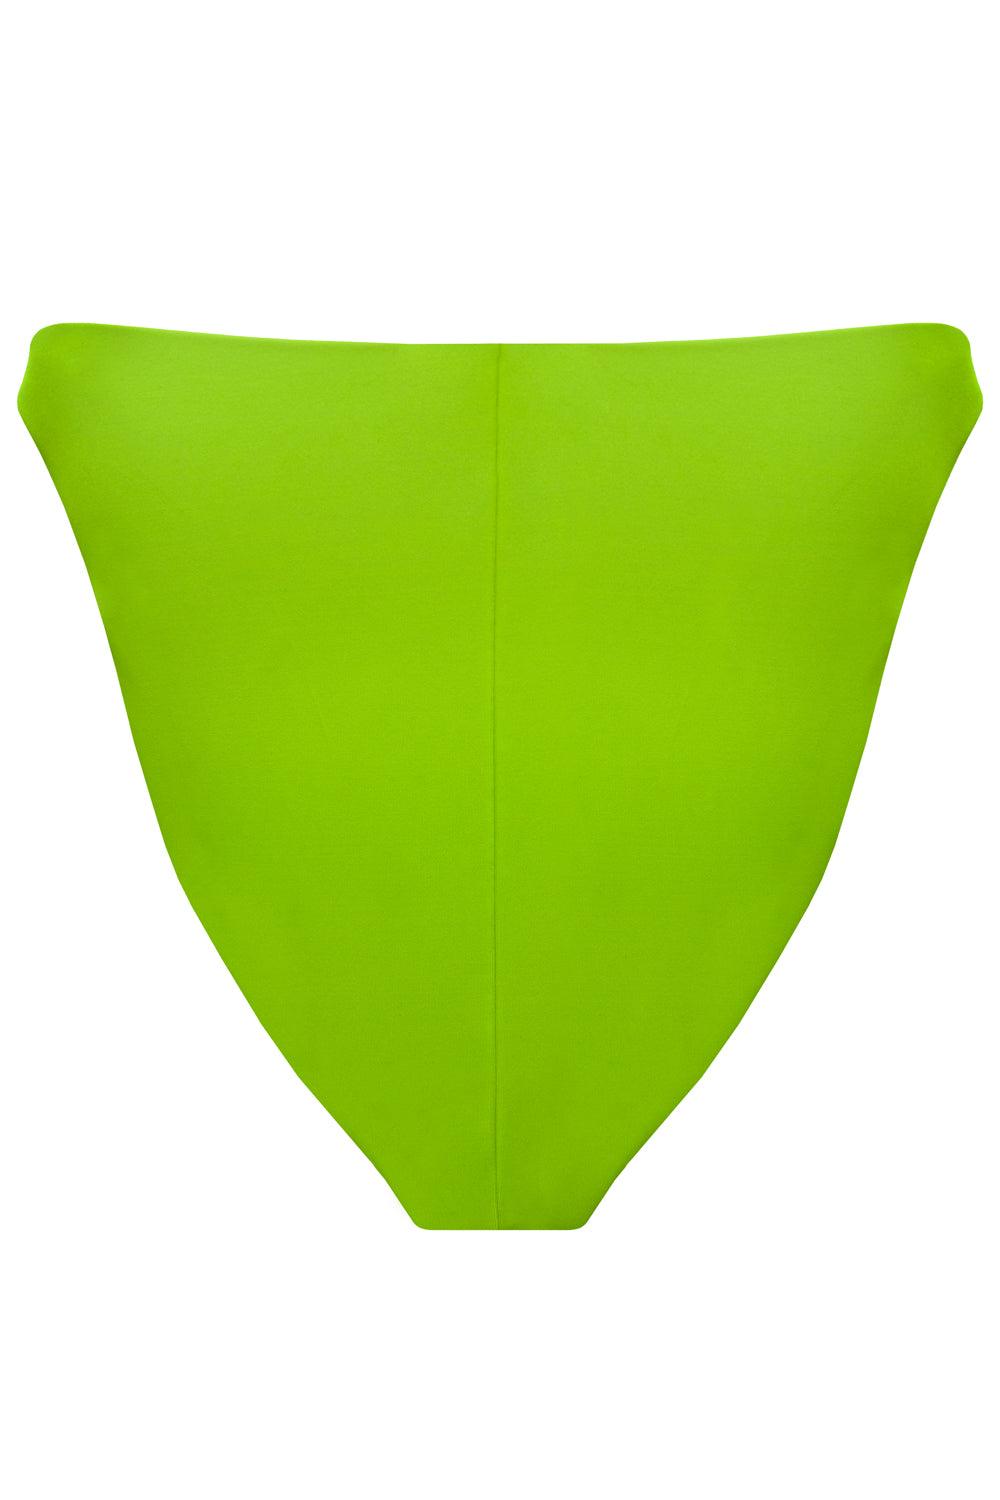 Radiya Greenery high waisted bikini bottom - Bikini bottom by Keosme. Shop on yesUndress